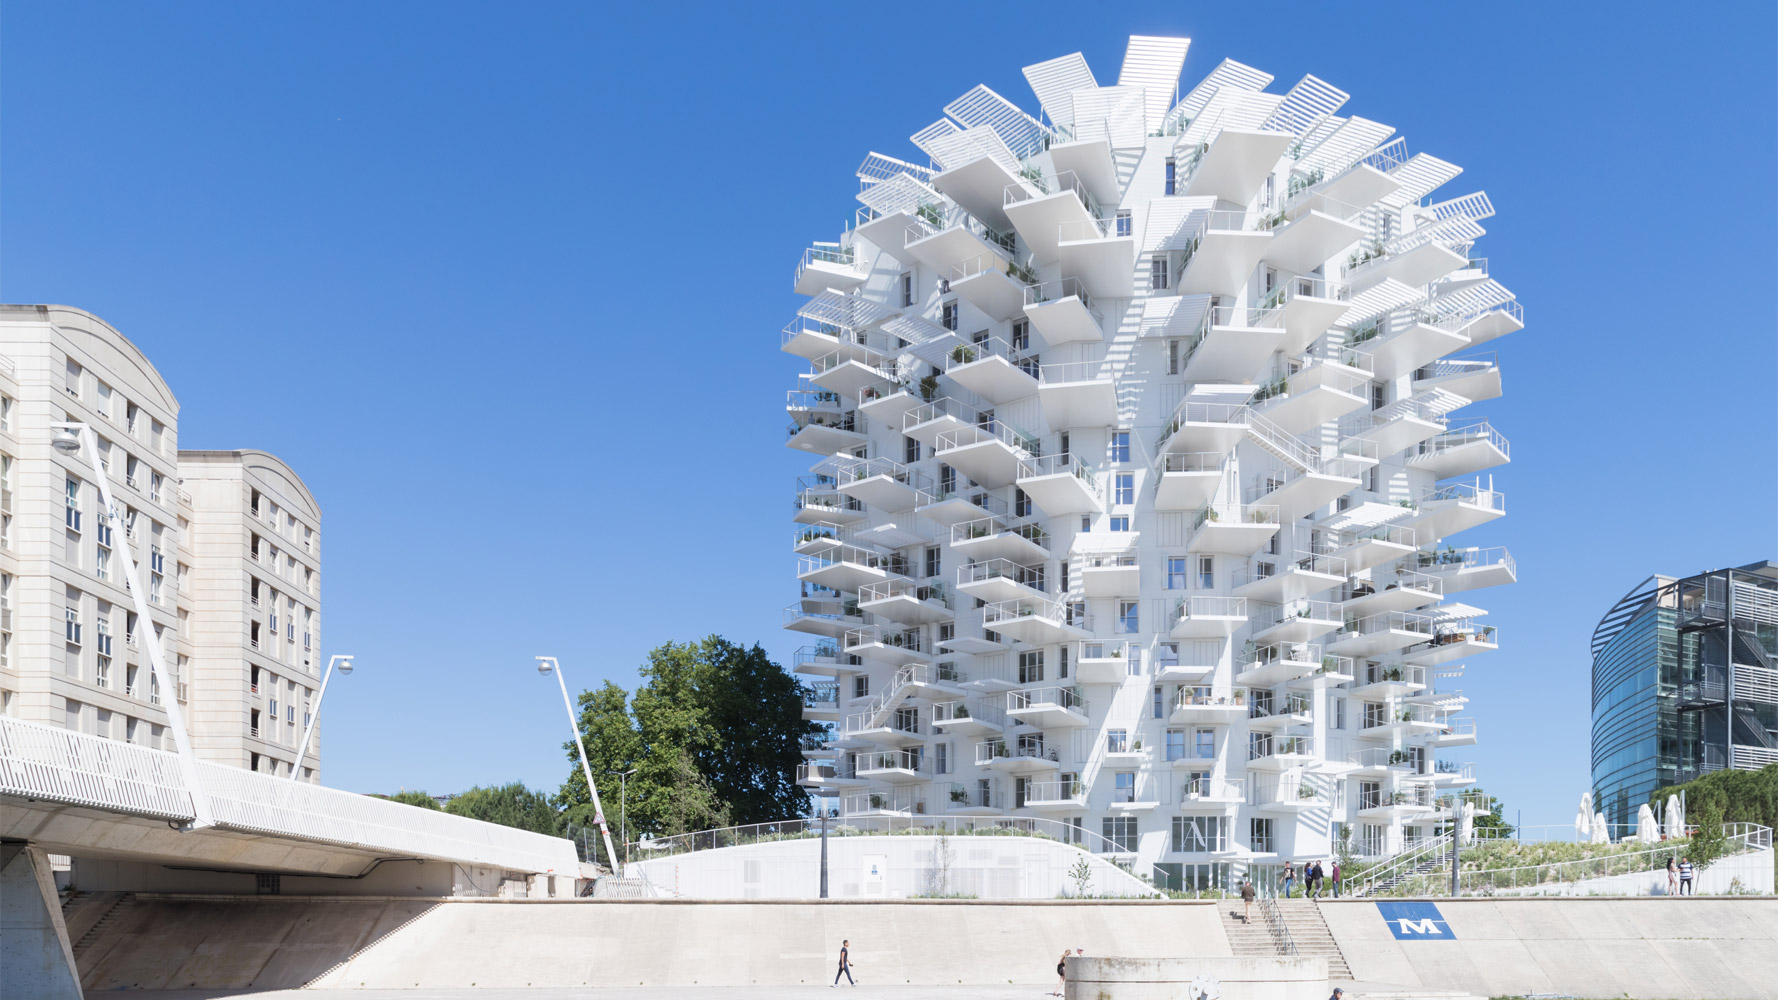 L'Arbre Blanc_Sou Fujimoto Architects_© Iwan Baan.jpg